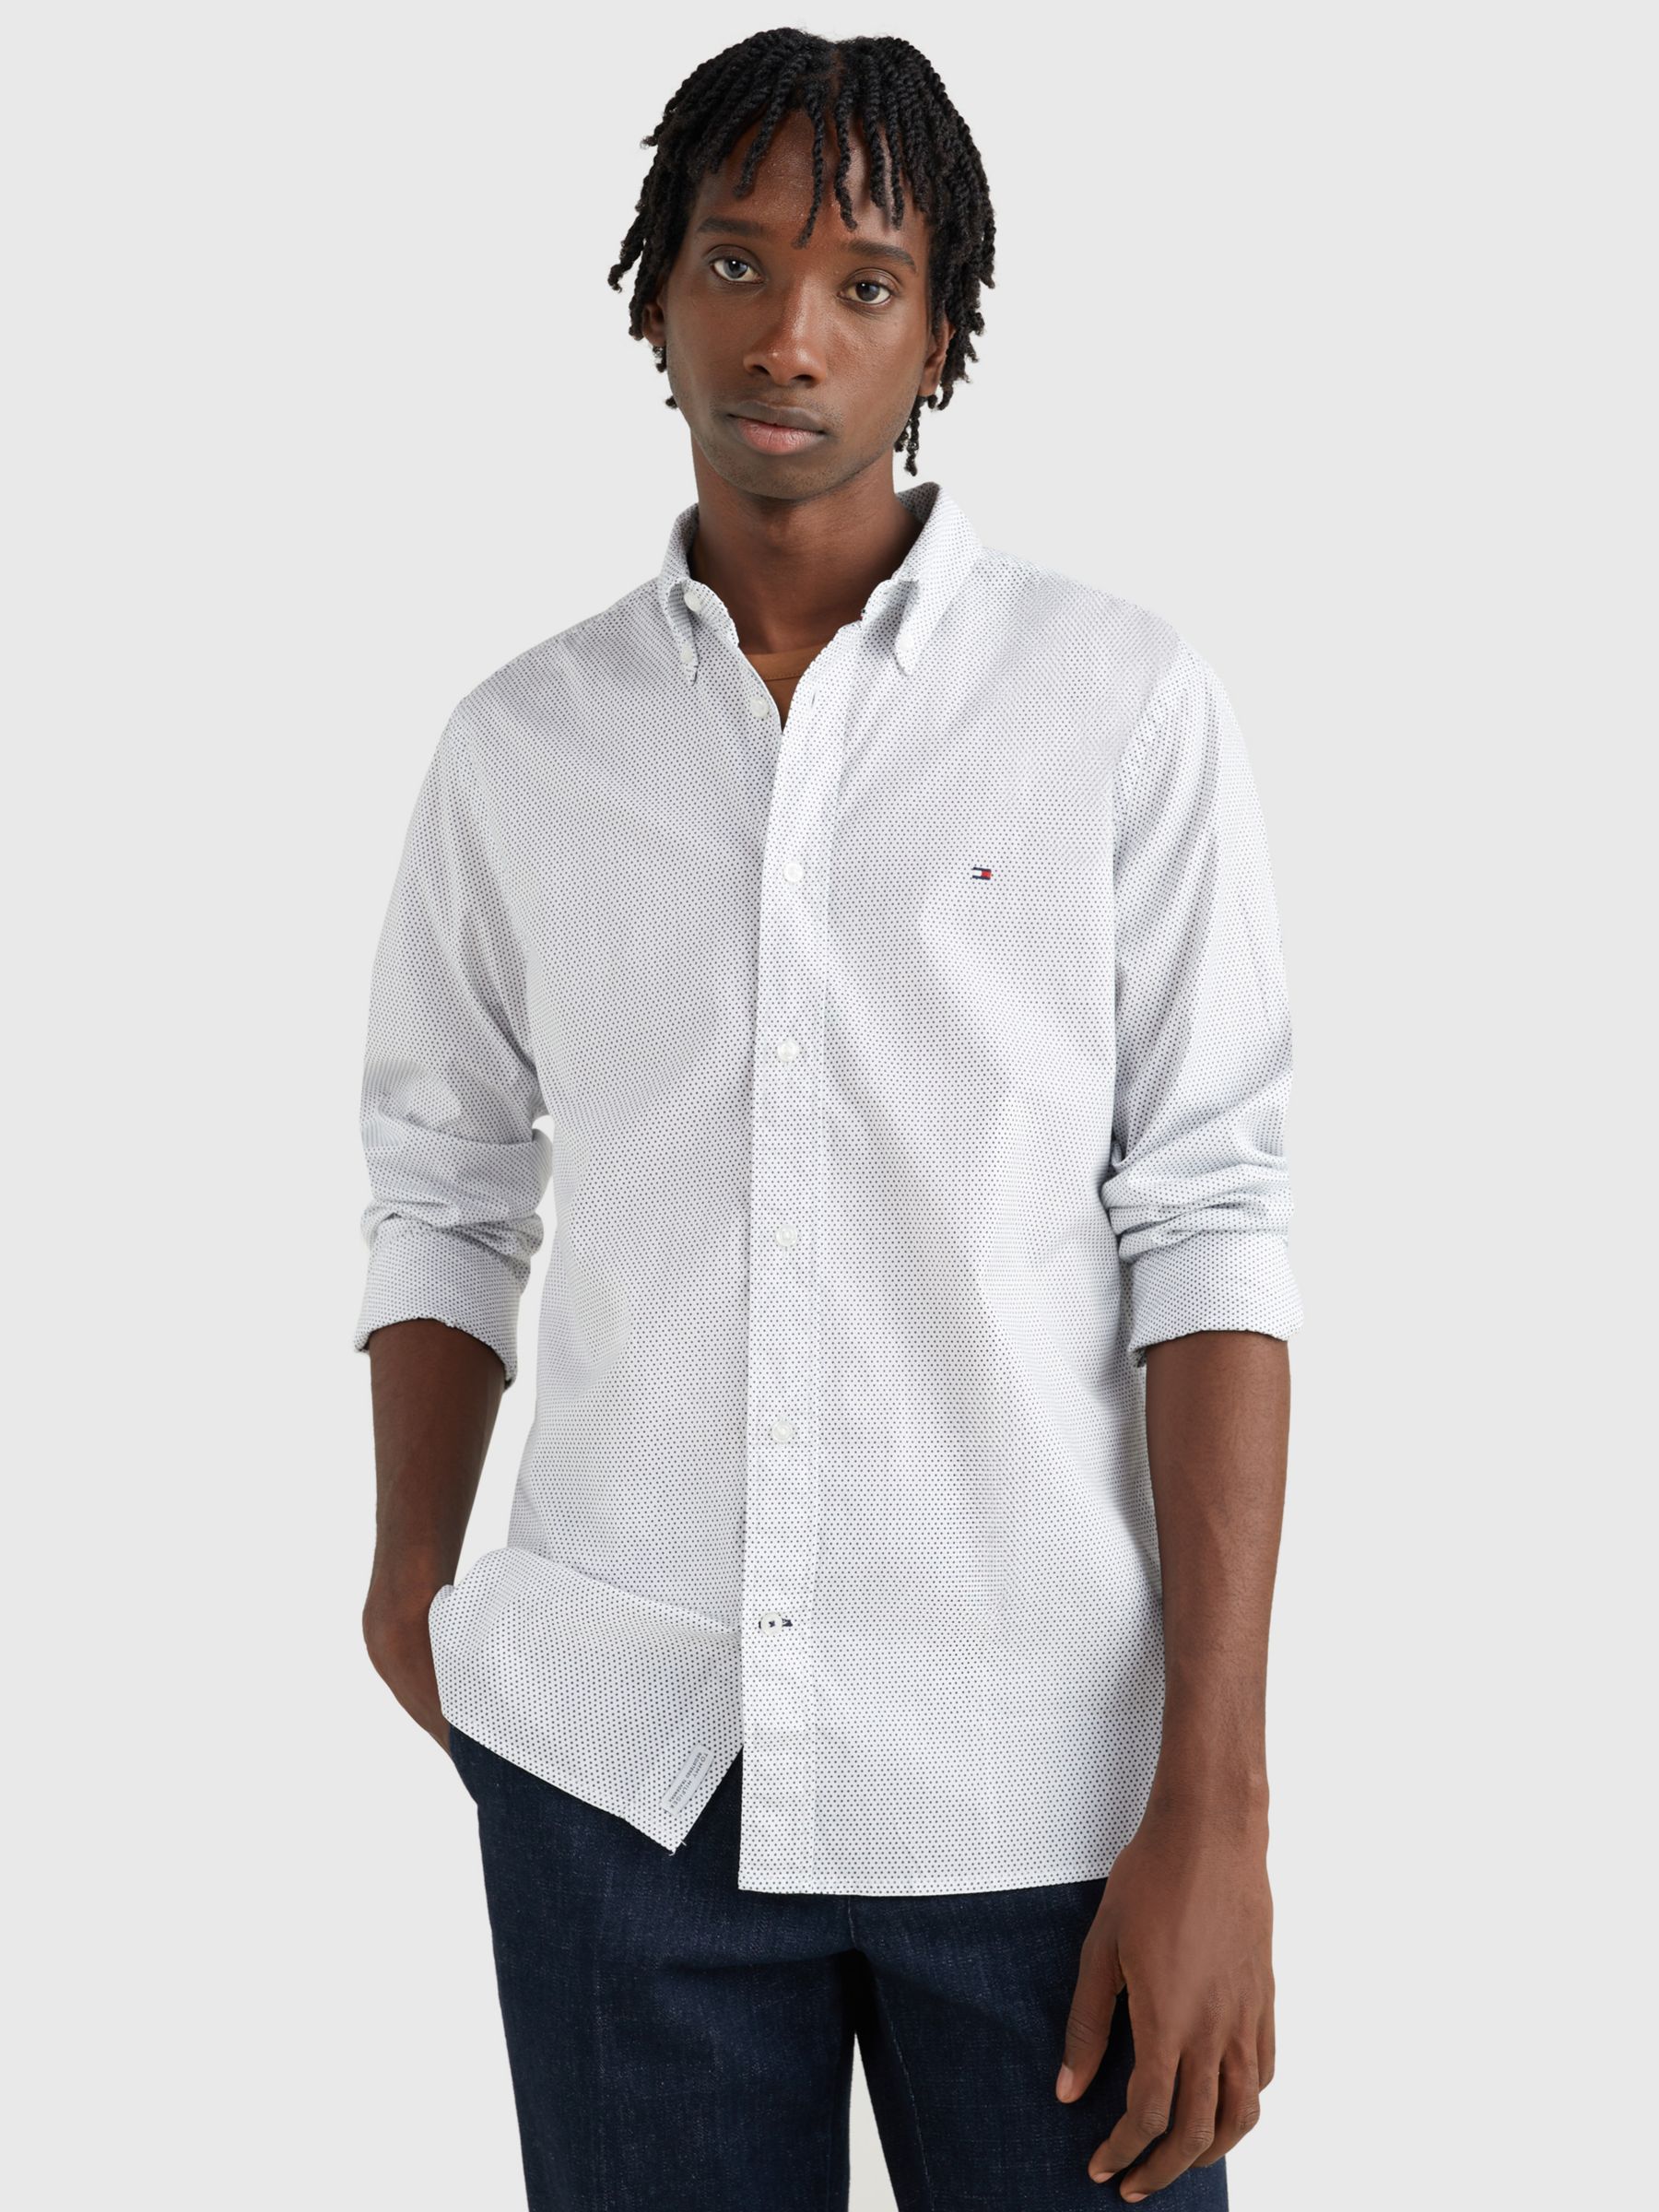 Tommy Hilfiger Core Flex Geo Print Shirt, White/Carbon Navy, XS